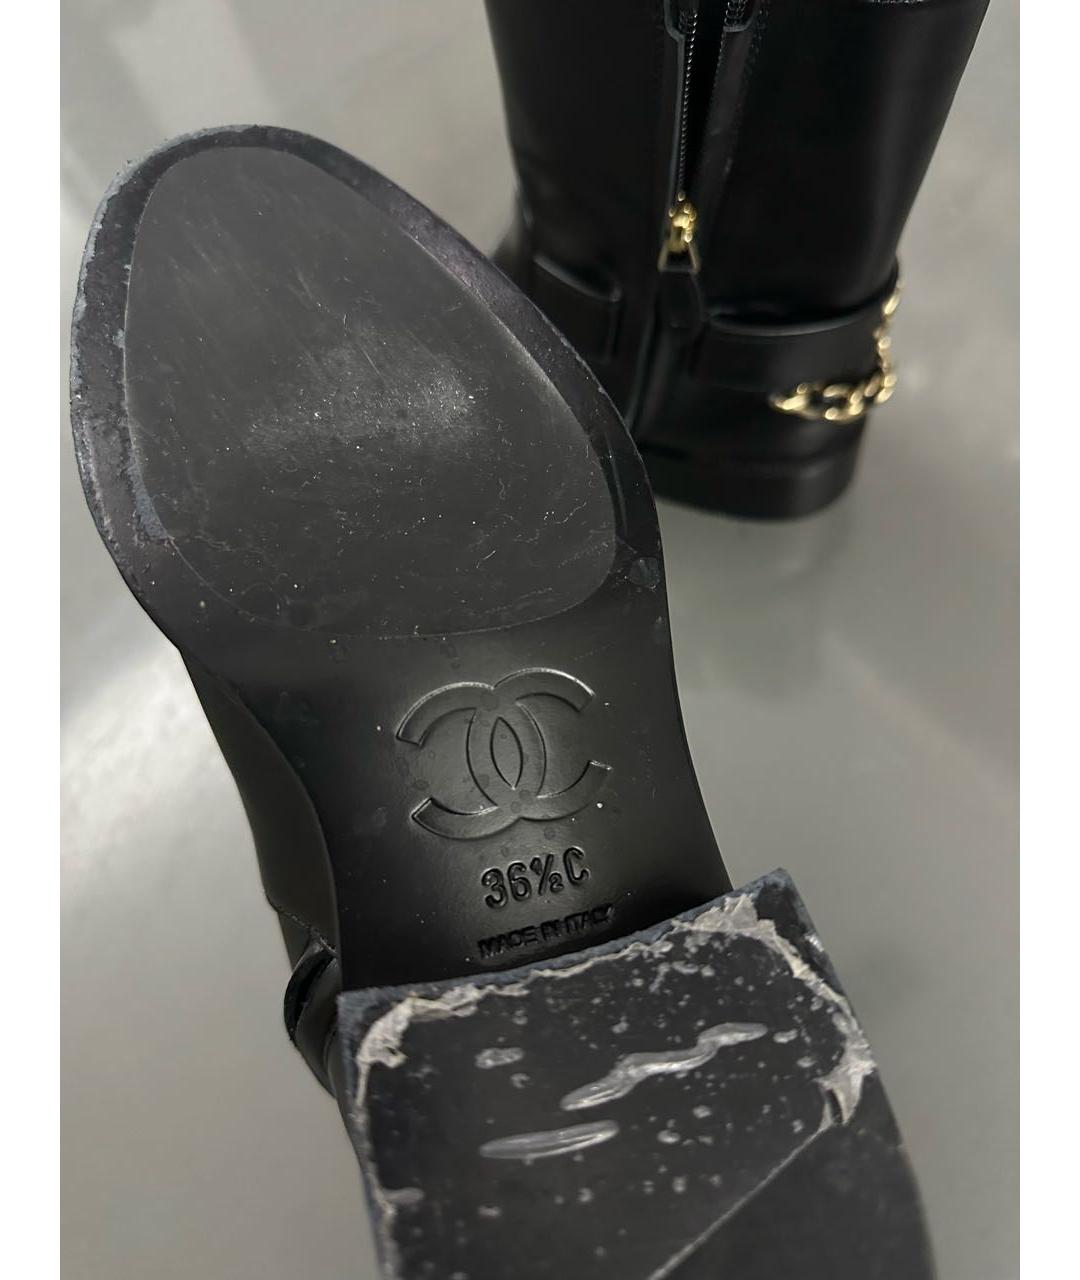 CHANEL PRE-OWNED Черные кожаные ботинки, фото 8